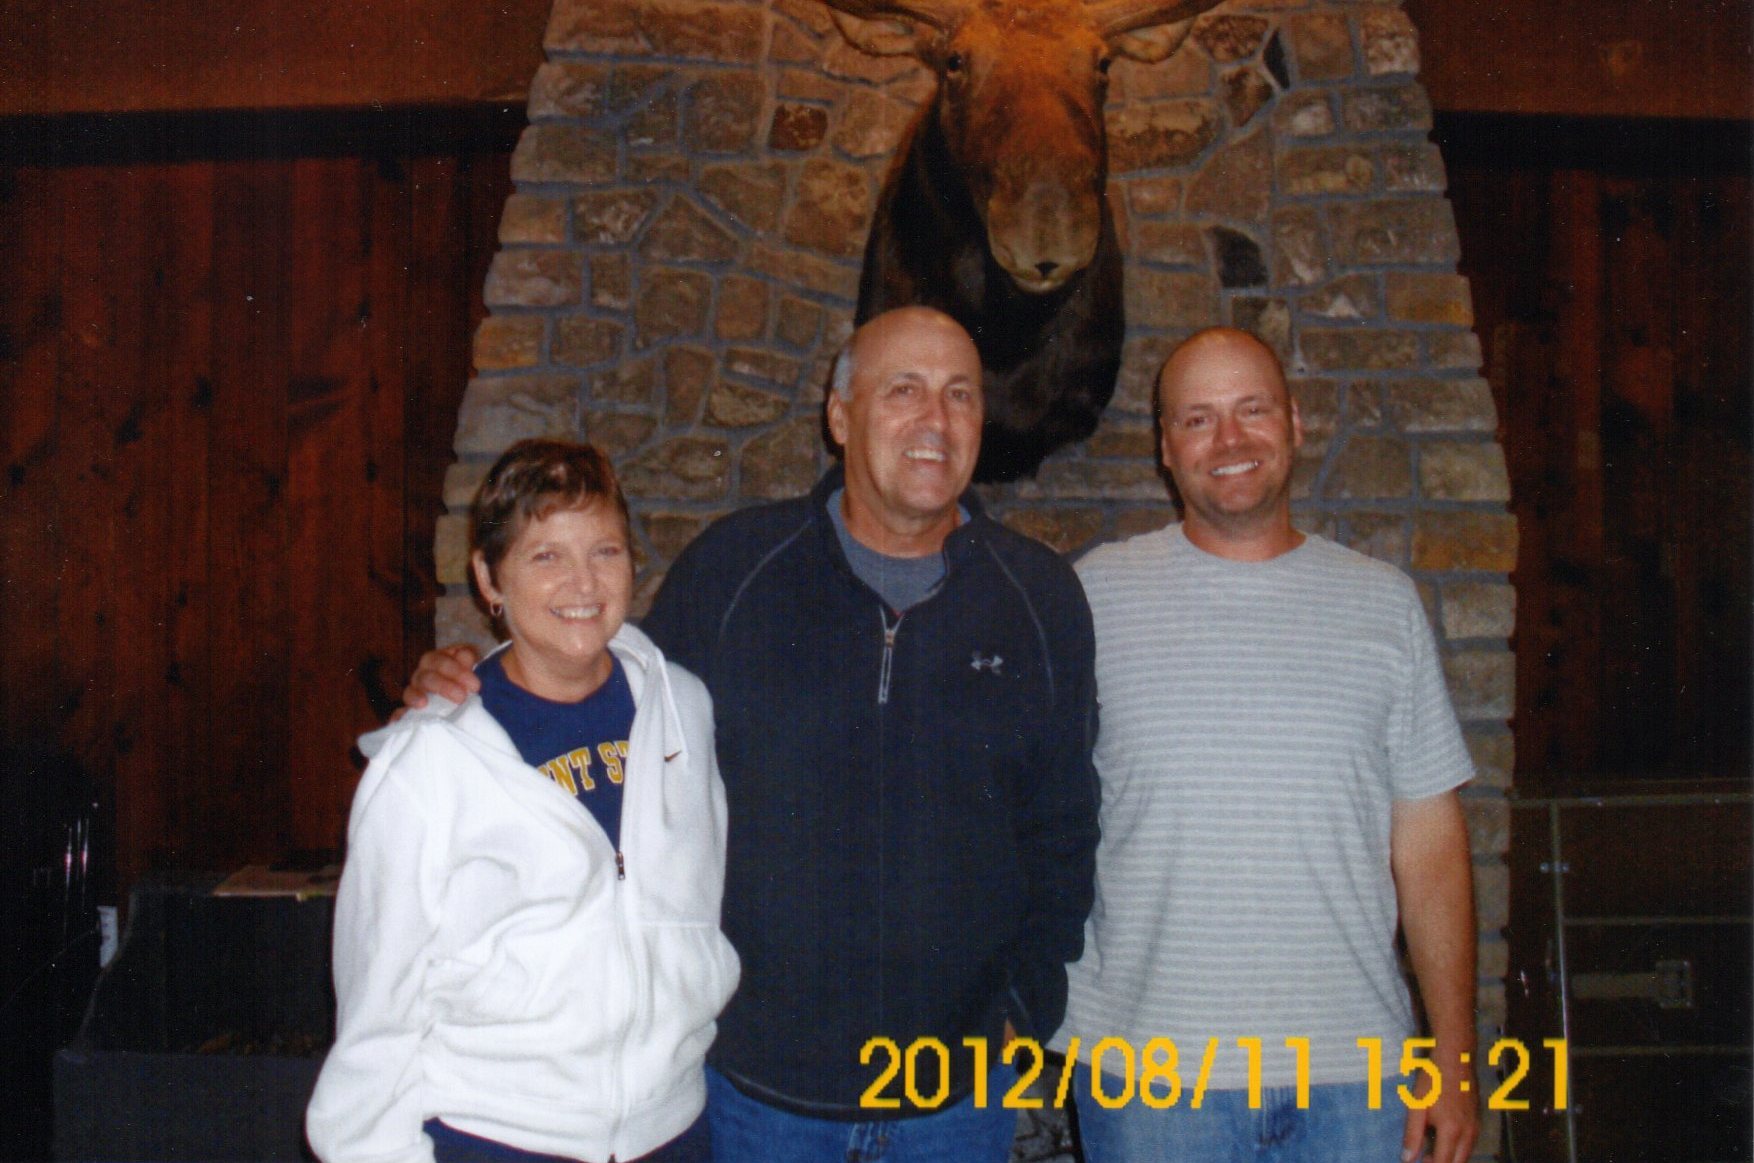 Susan, Joe, and Jonathon Zabowski, 2012/08/11